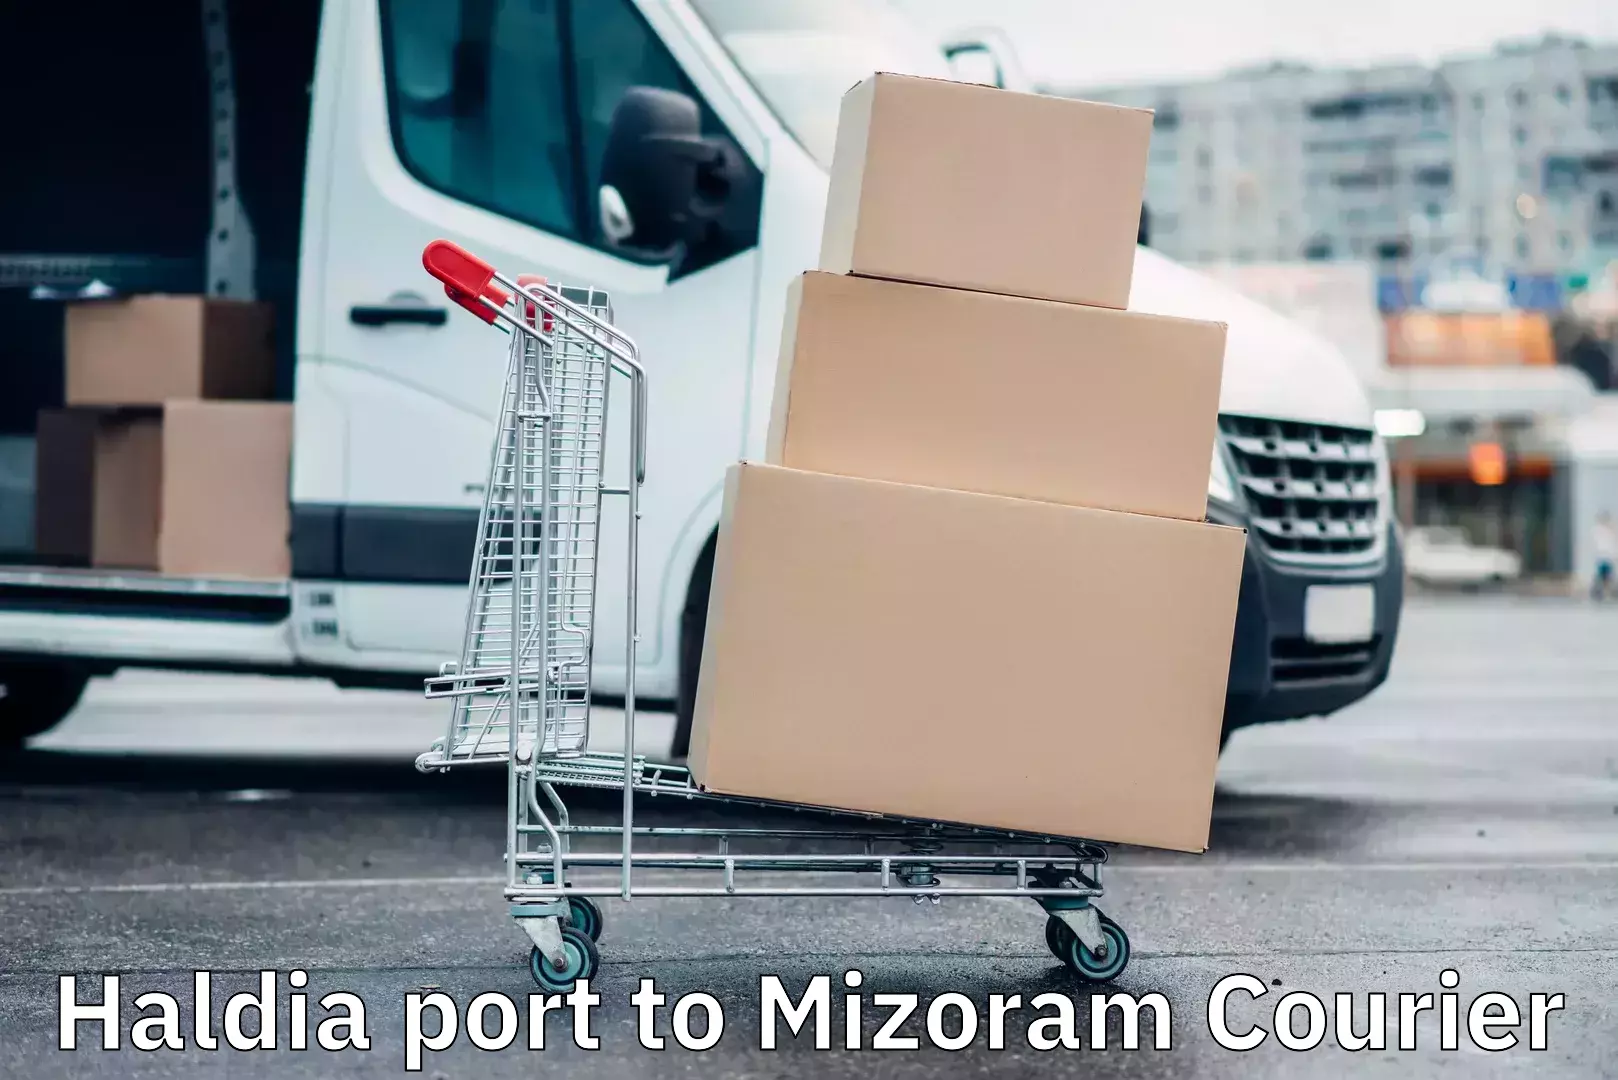 Smart courier technologies Haldia port to Mizoram